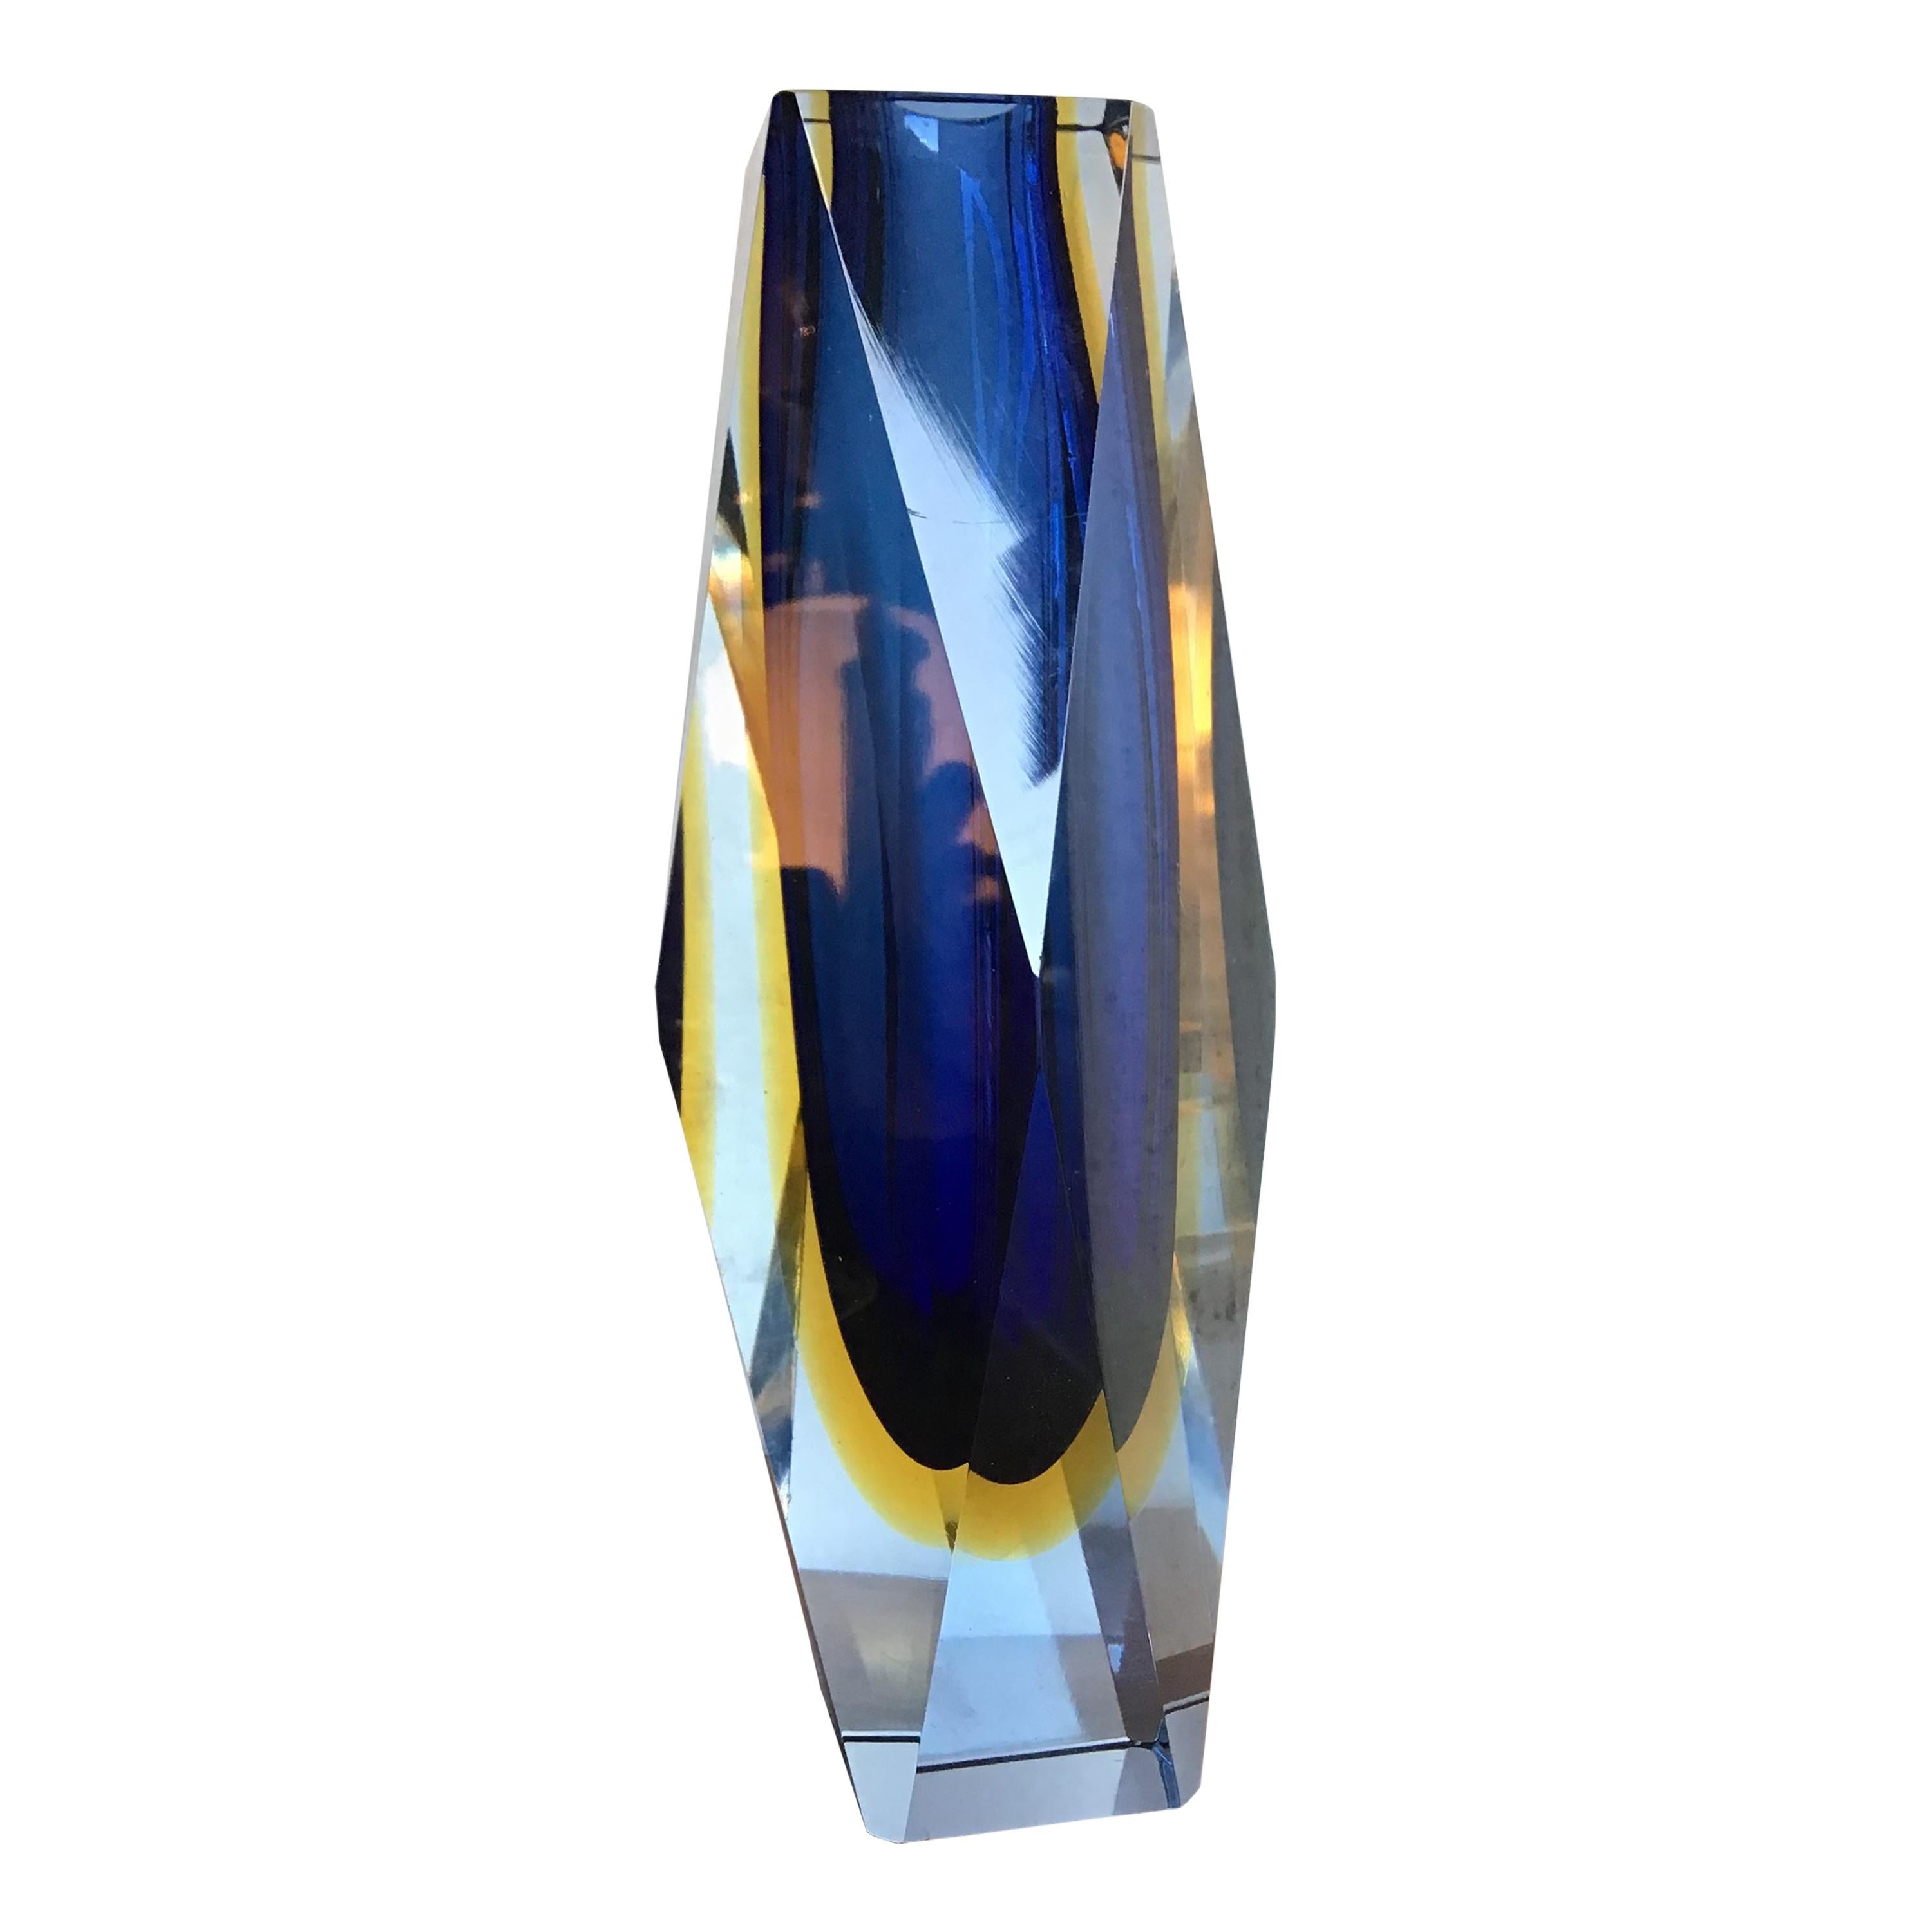 Seguso “Flavio Poli” Vase Murano Glass, 1950, Italy